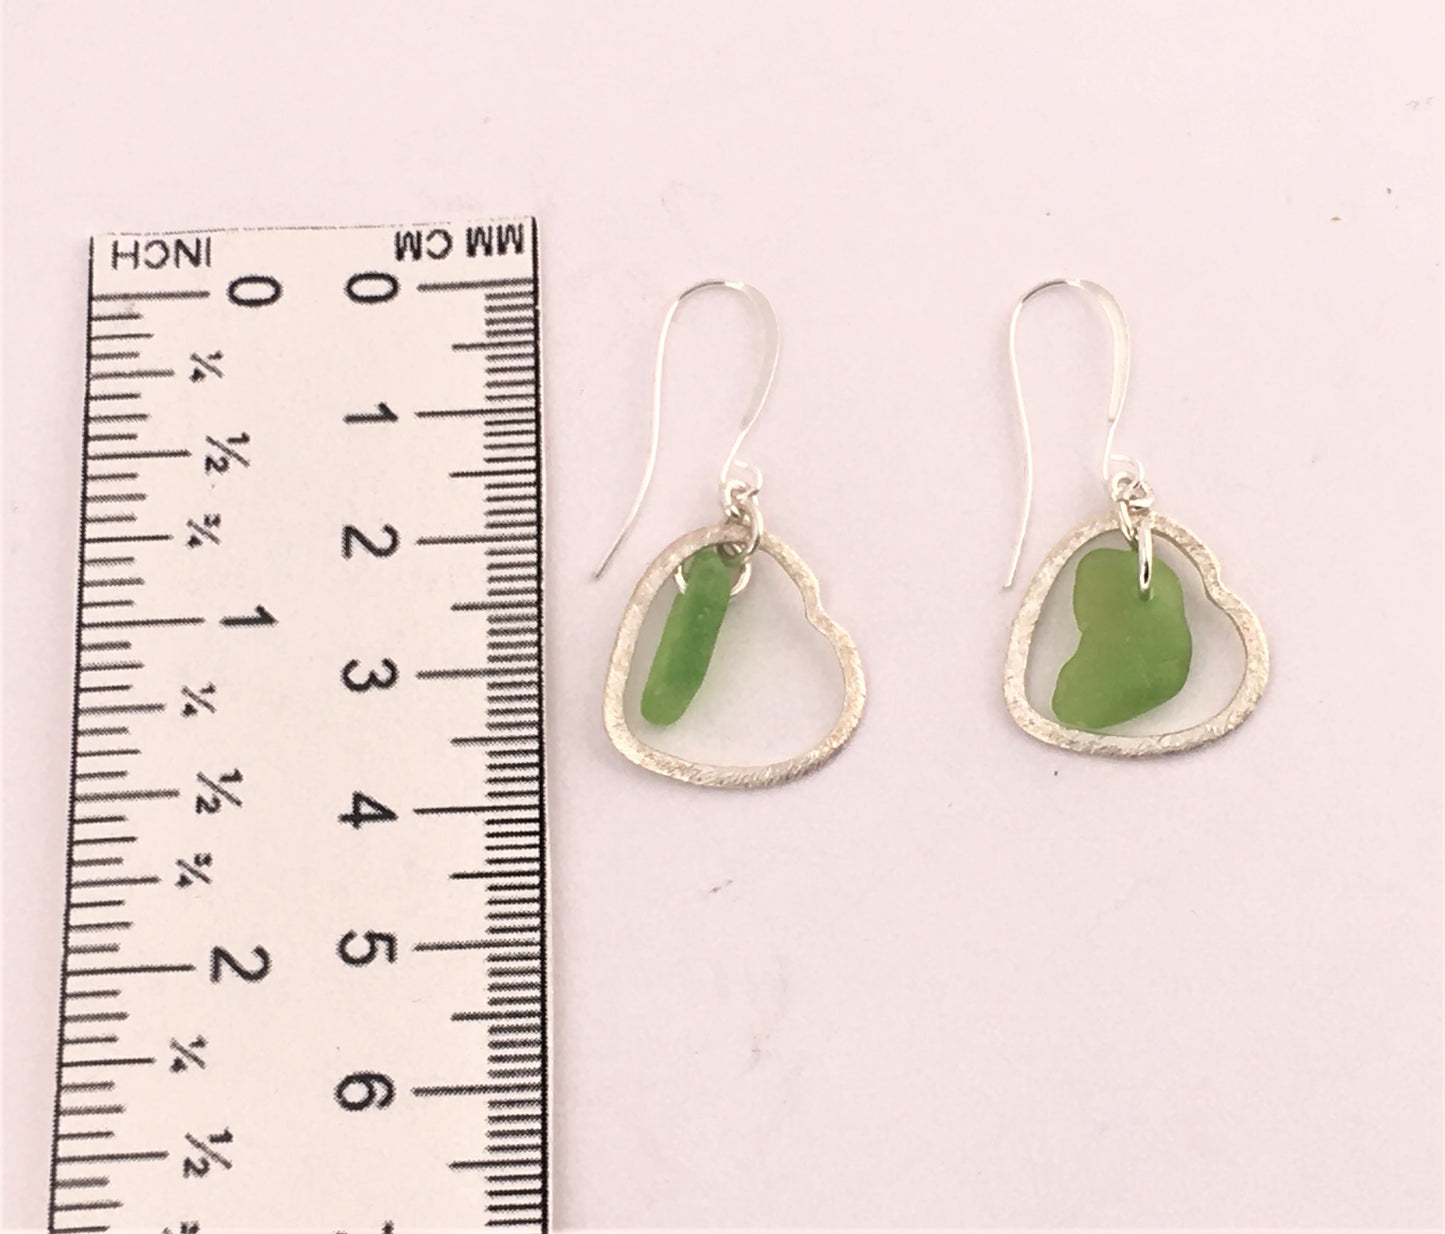 Heart Earrings - Green Sea Glass from Cape Breton, Nova Scotia, Canada and Sterling Silver